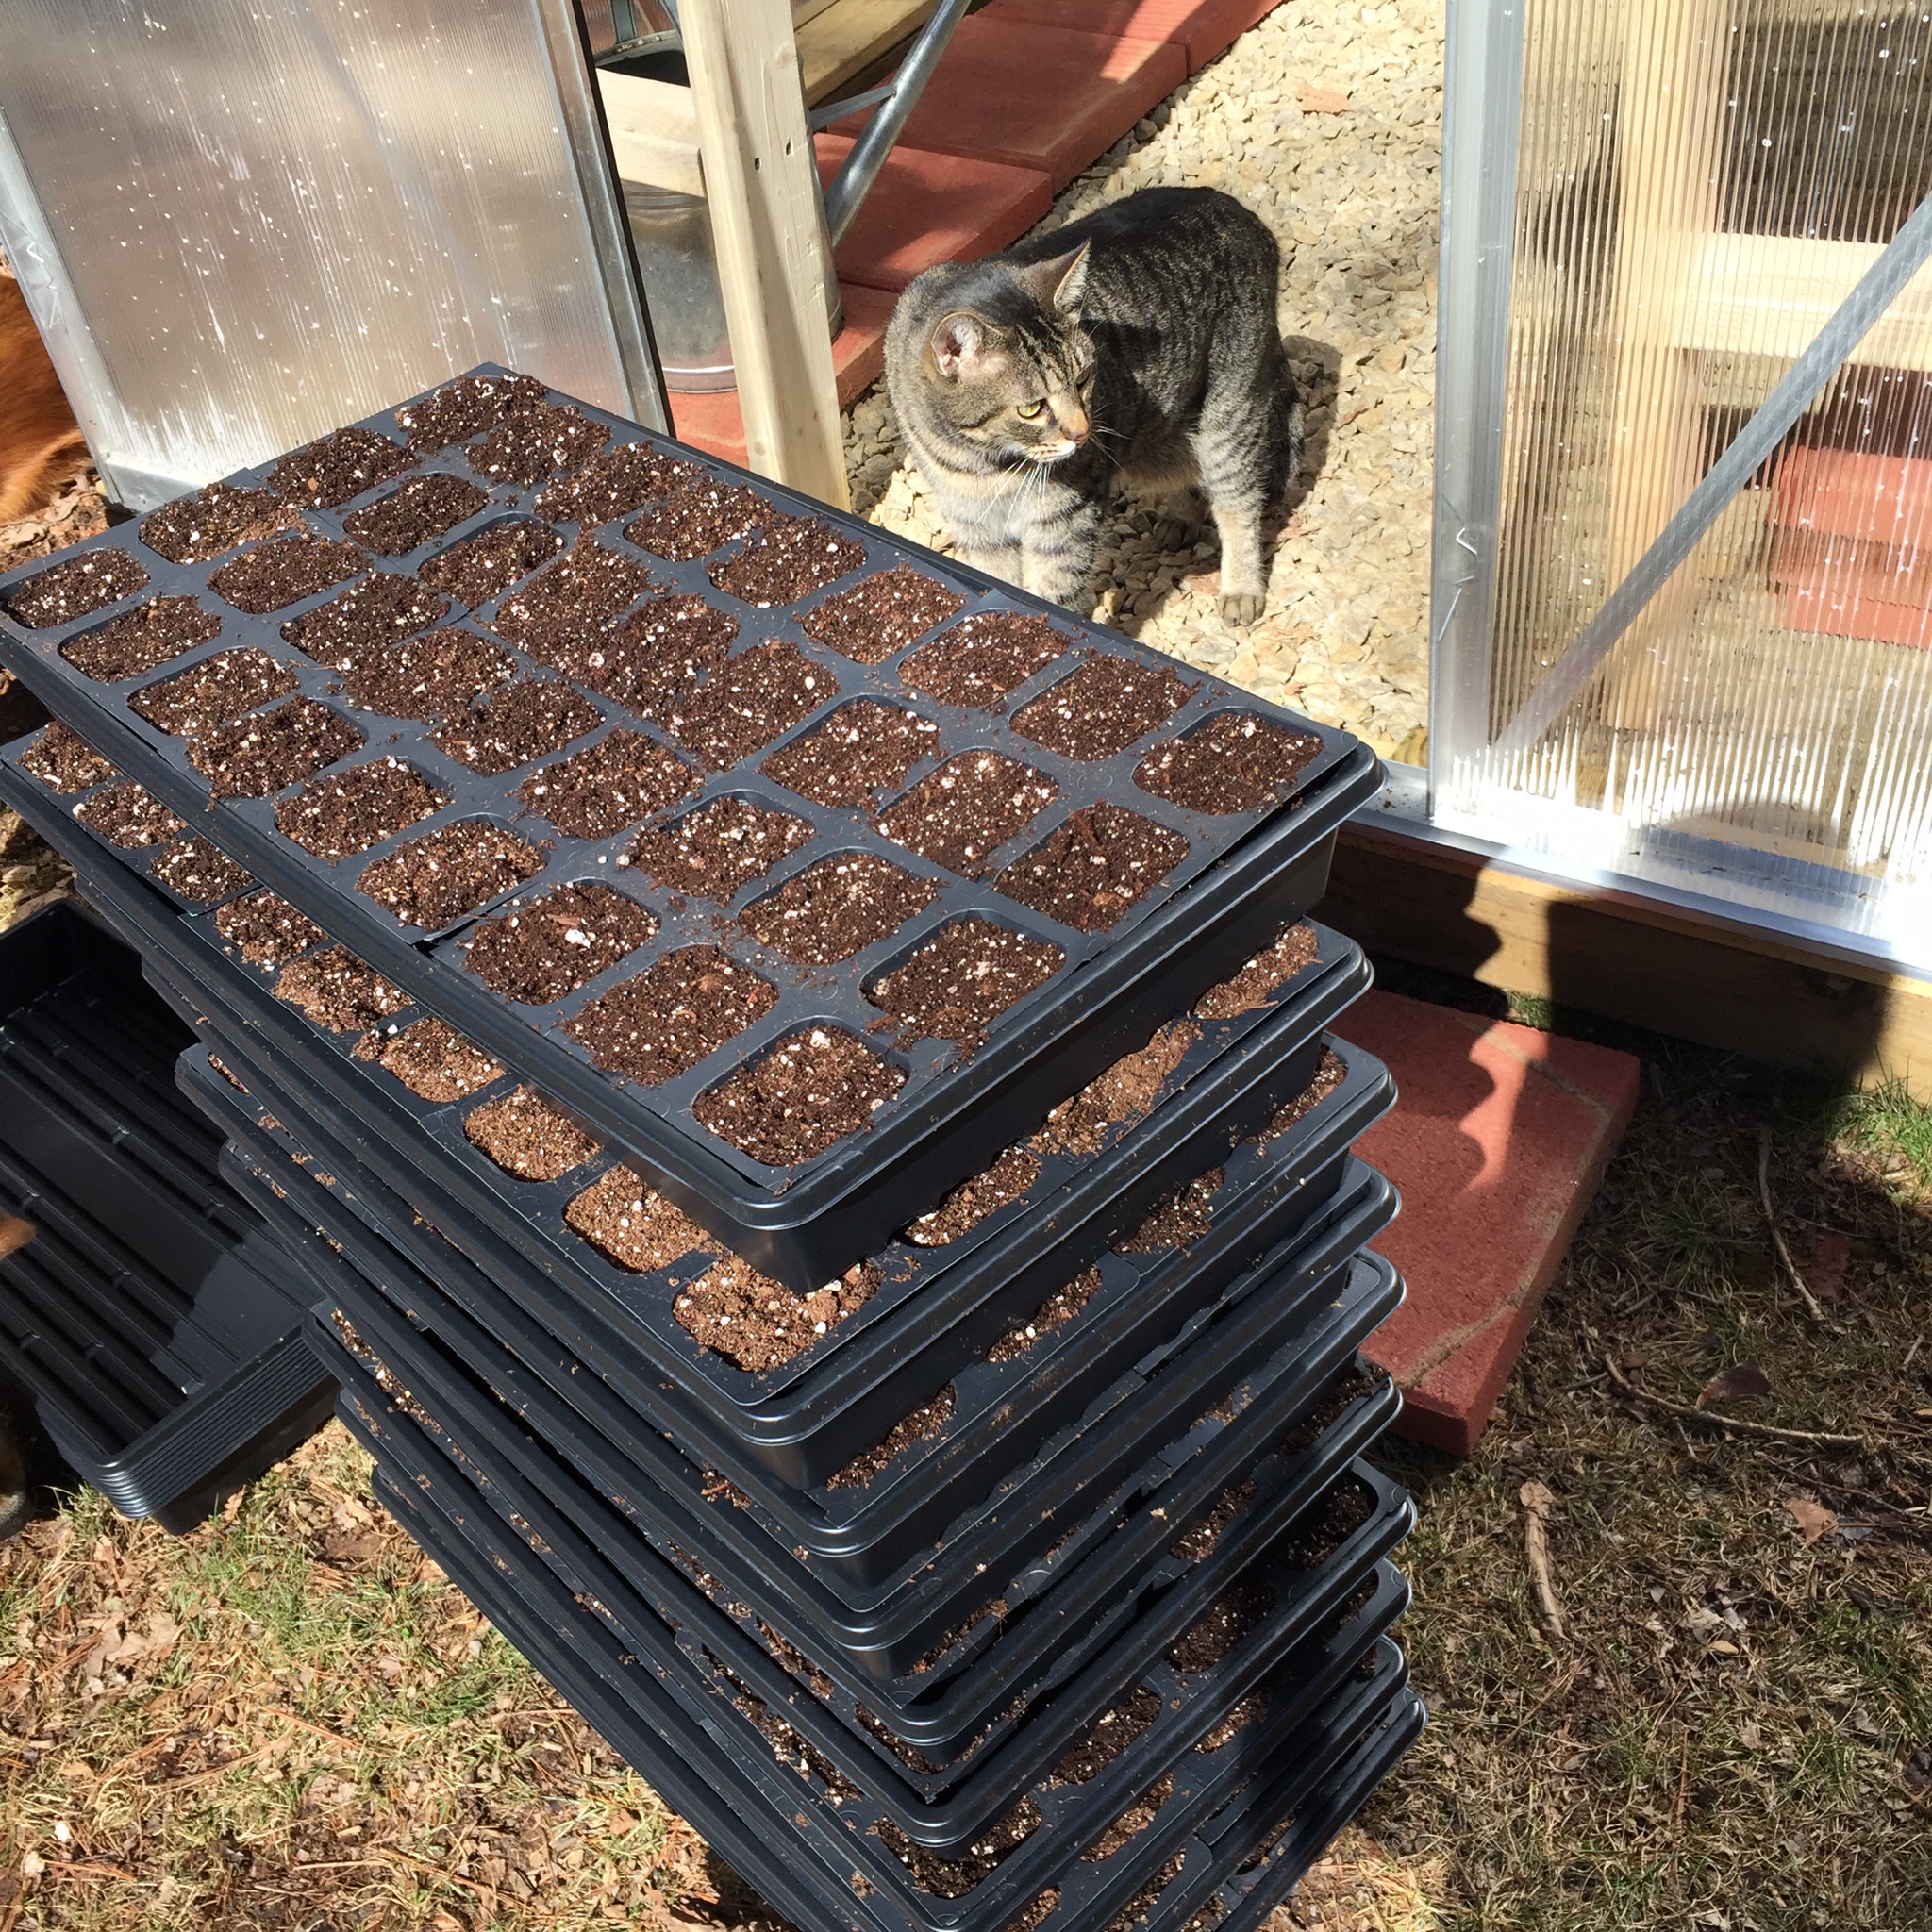 Norman the cat: greenhouse overseer